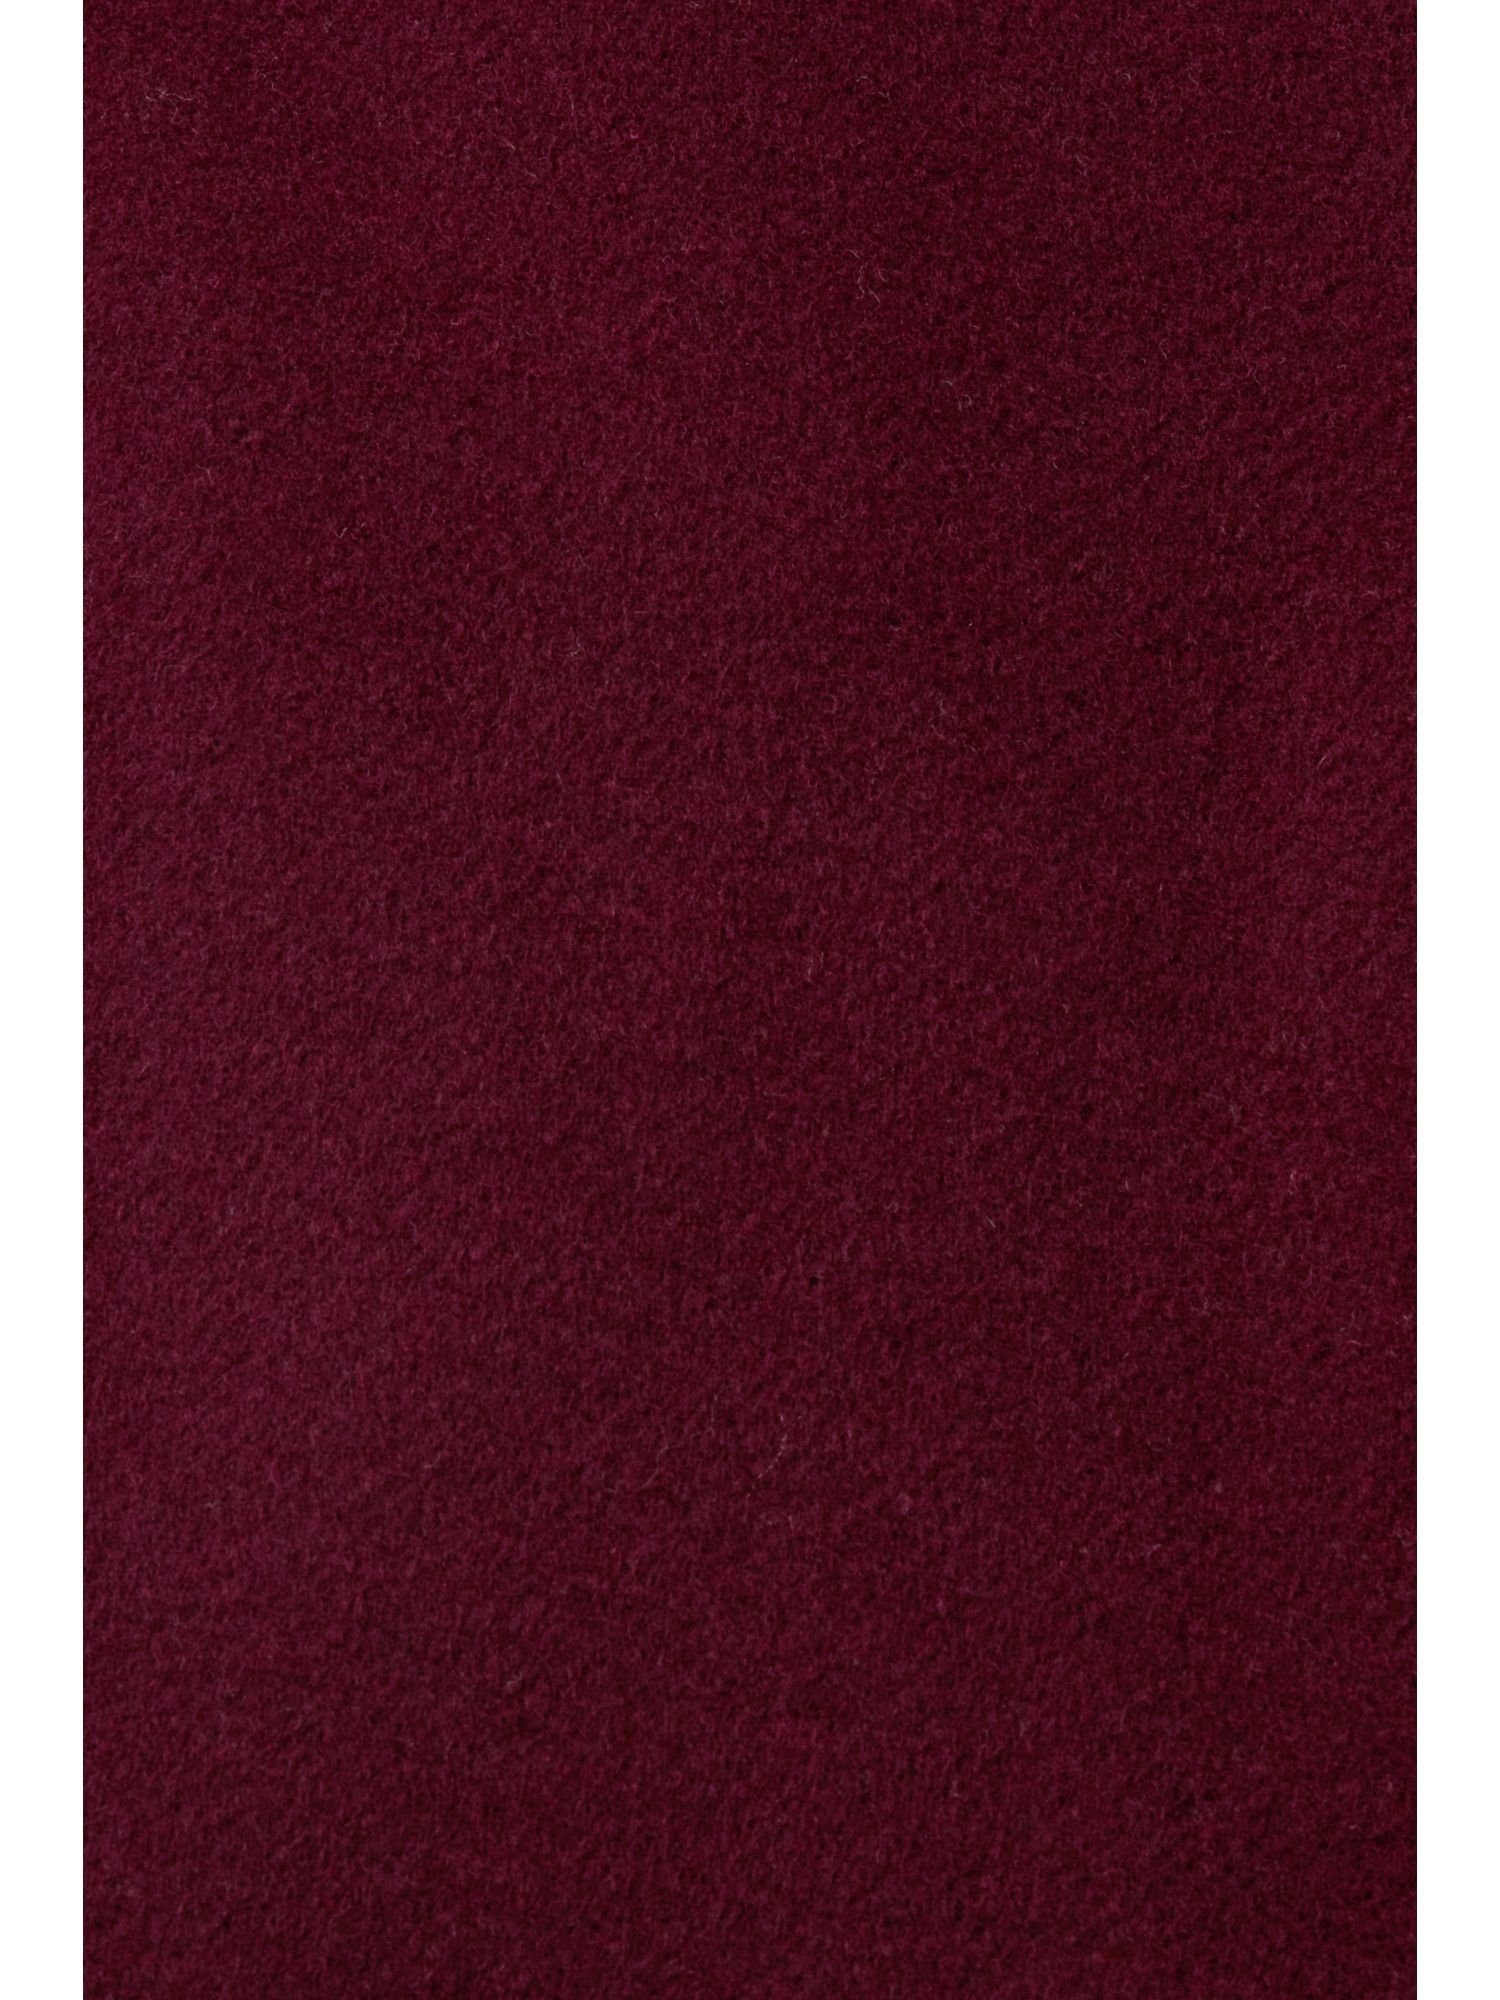 Wollmantel Collection Mantel mit Recycelt: Esprit Wolle